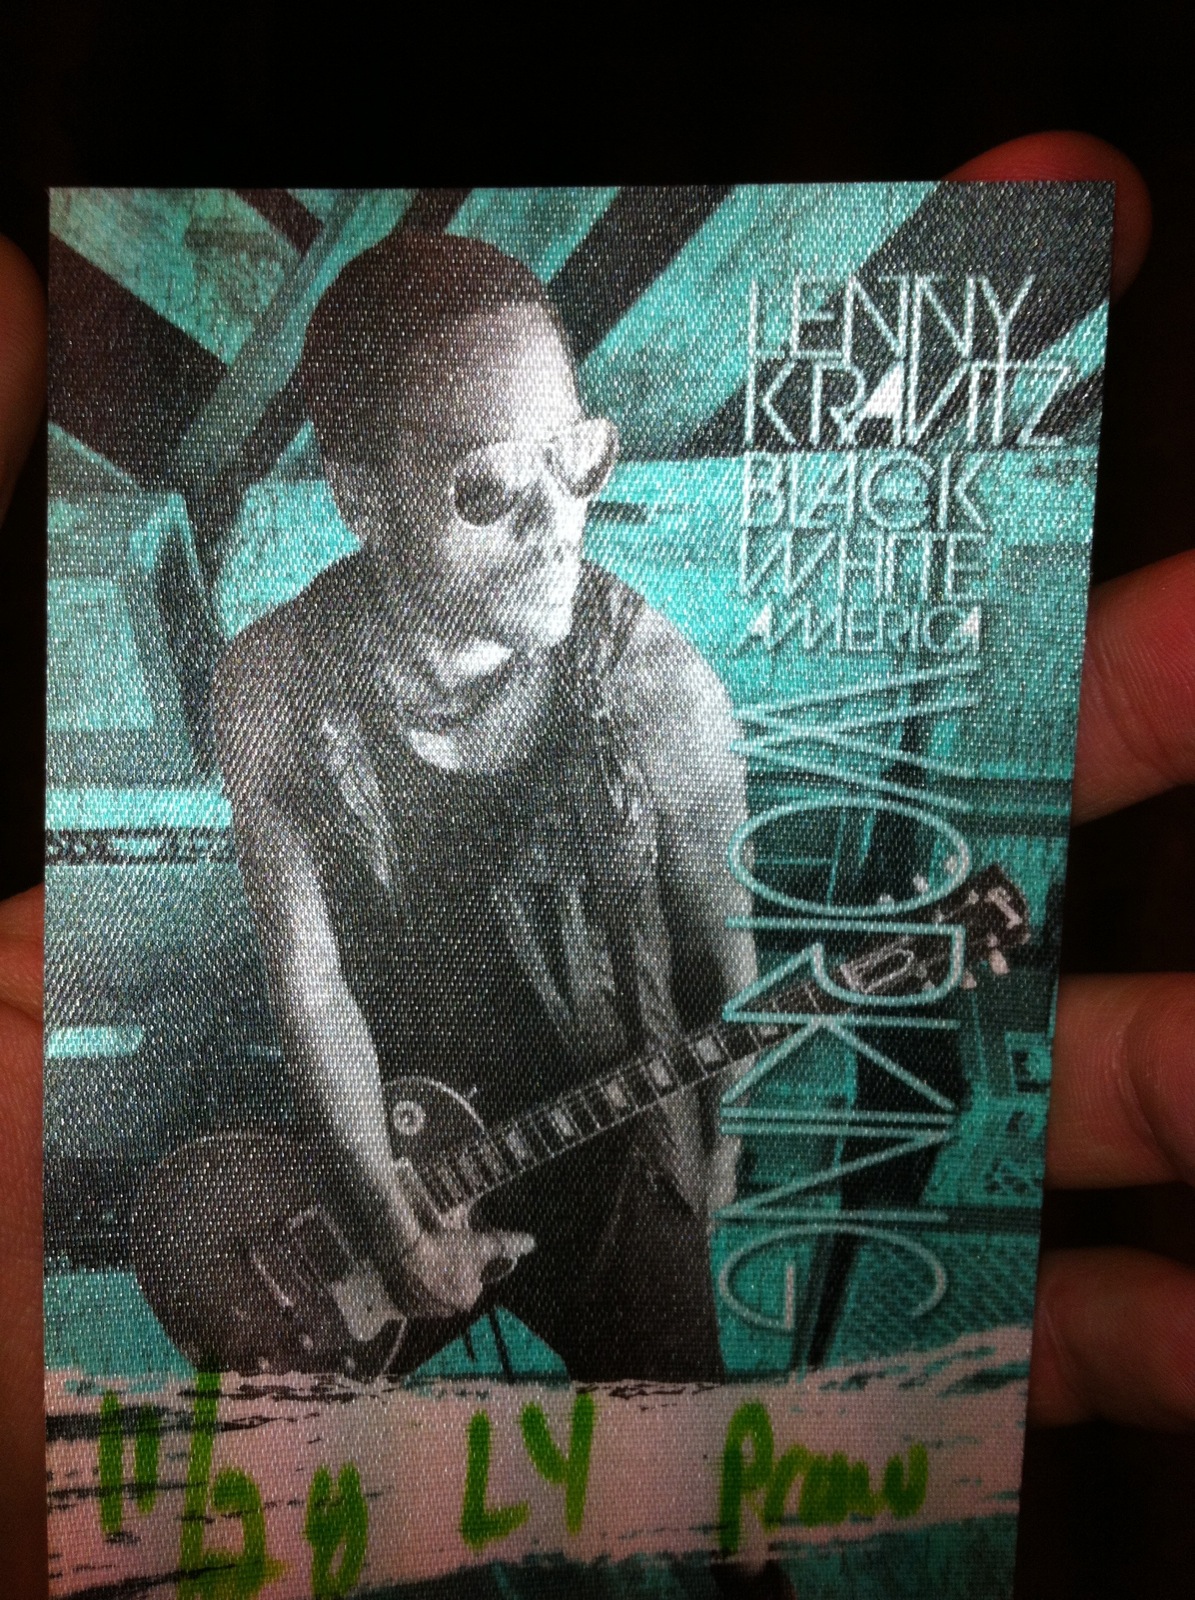 Backstage Lenny Kravitz